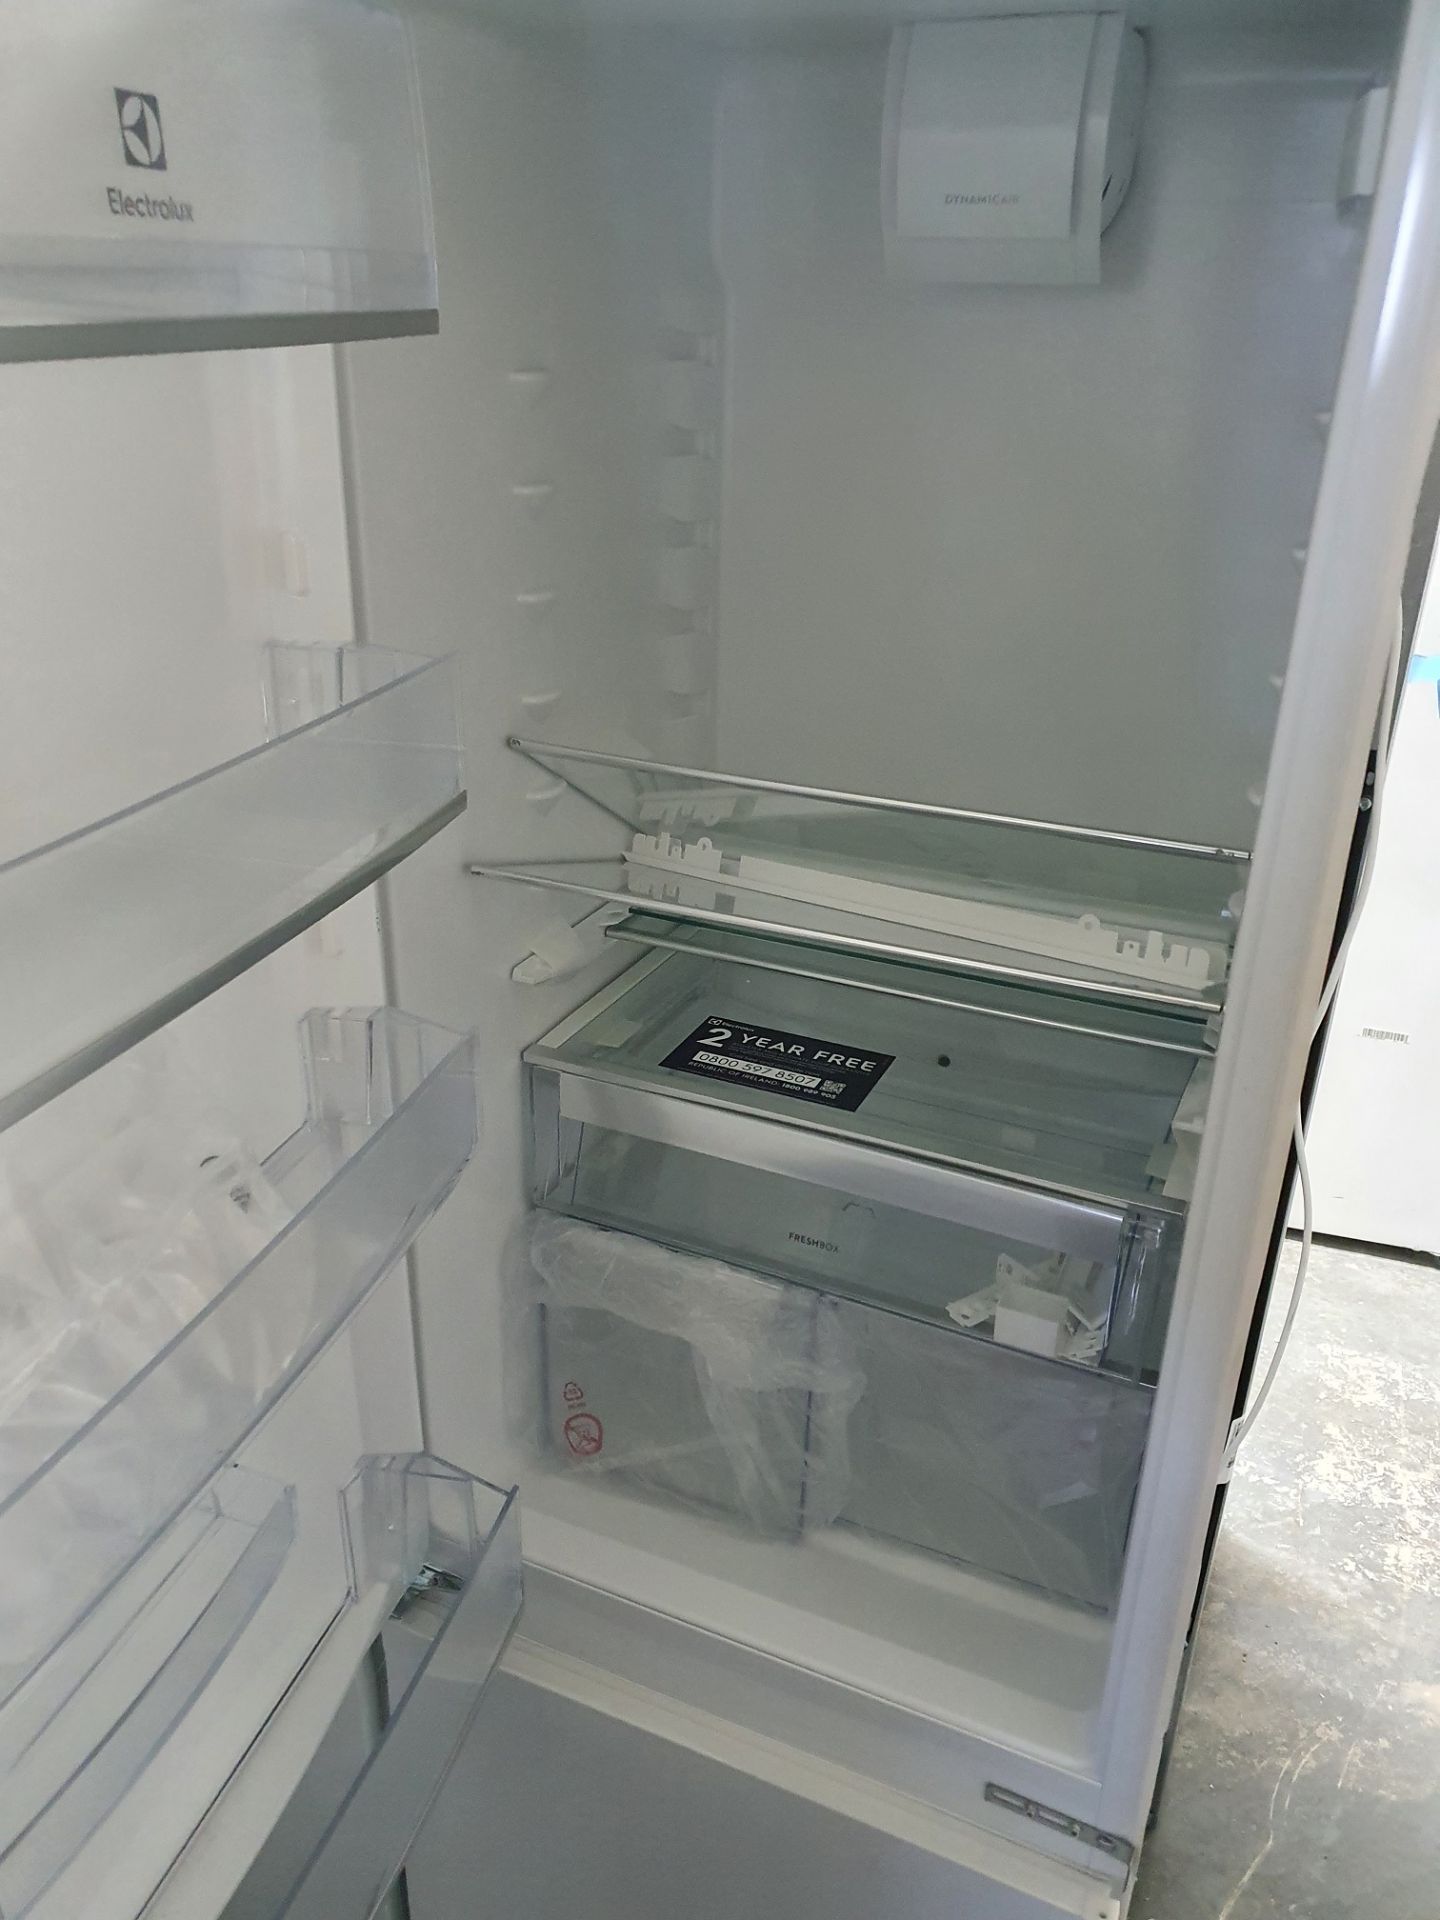 NEW/GRADED AND UNPACKAGED Prima PRRF702 Integrated Fridge Freezer (Brand new slight external - Image 11 of 14